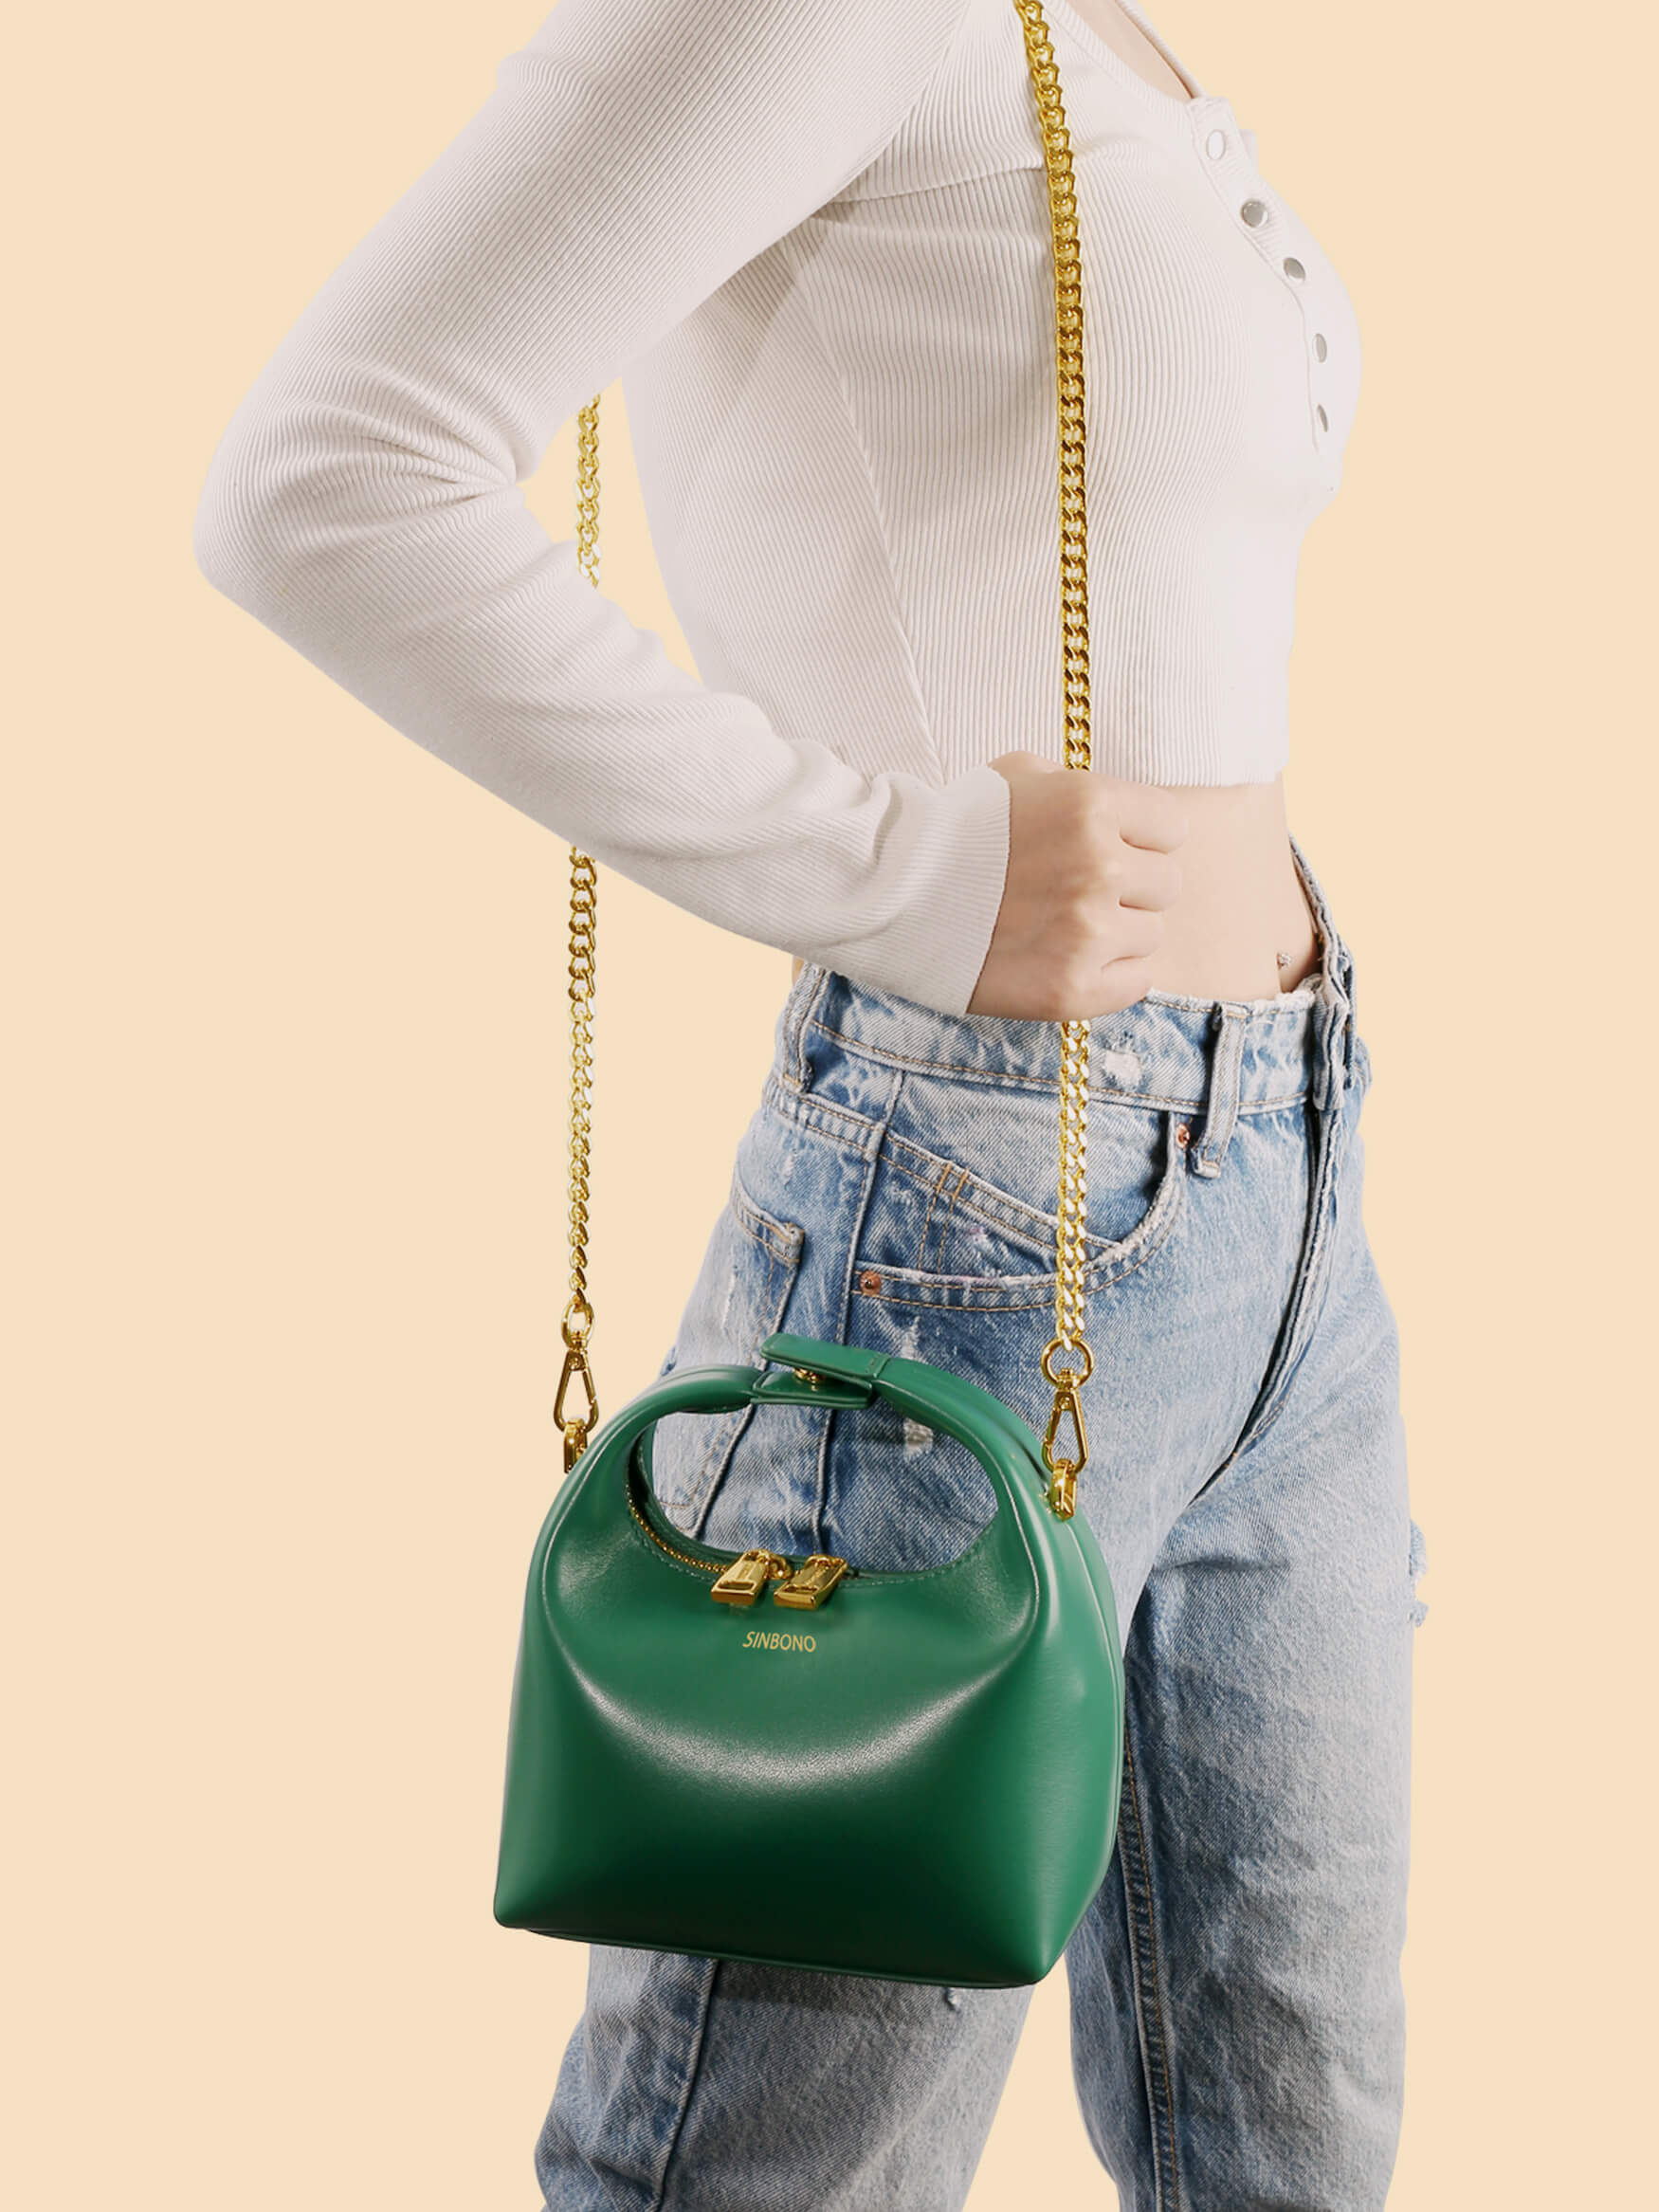 SINBONO Vienna Green Leather Handbags -Vegan Leather Women Bag